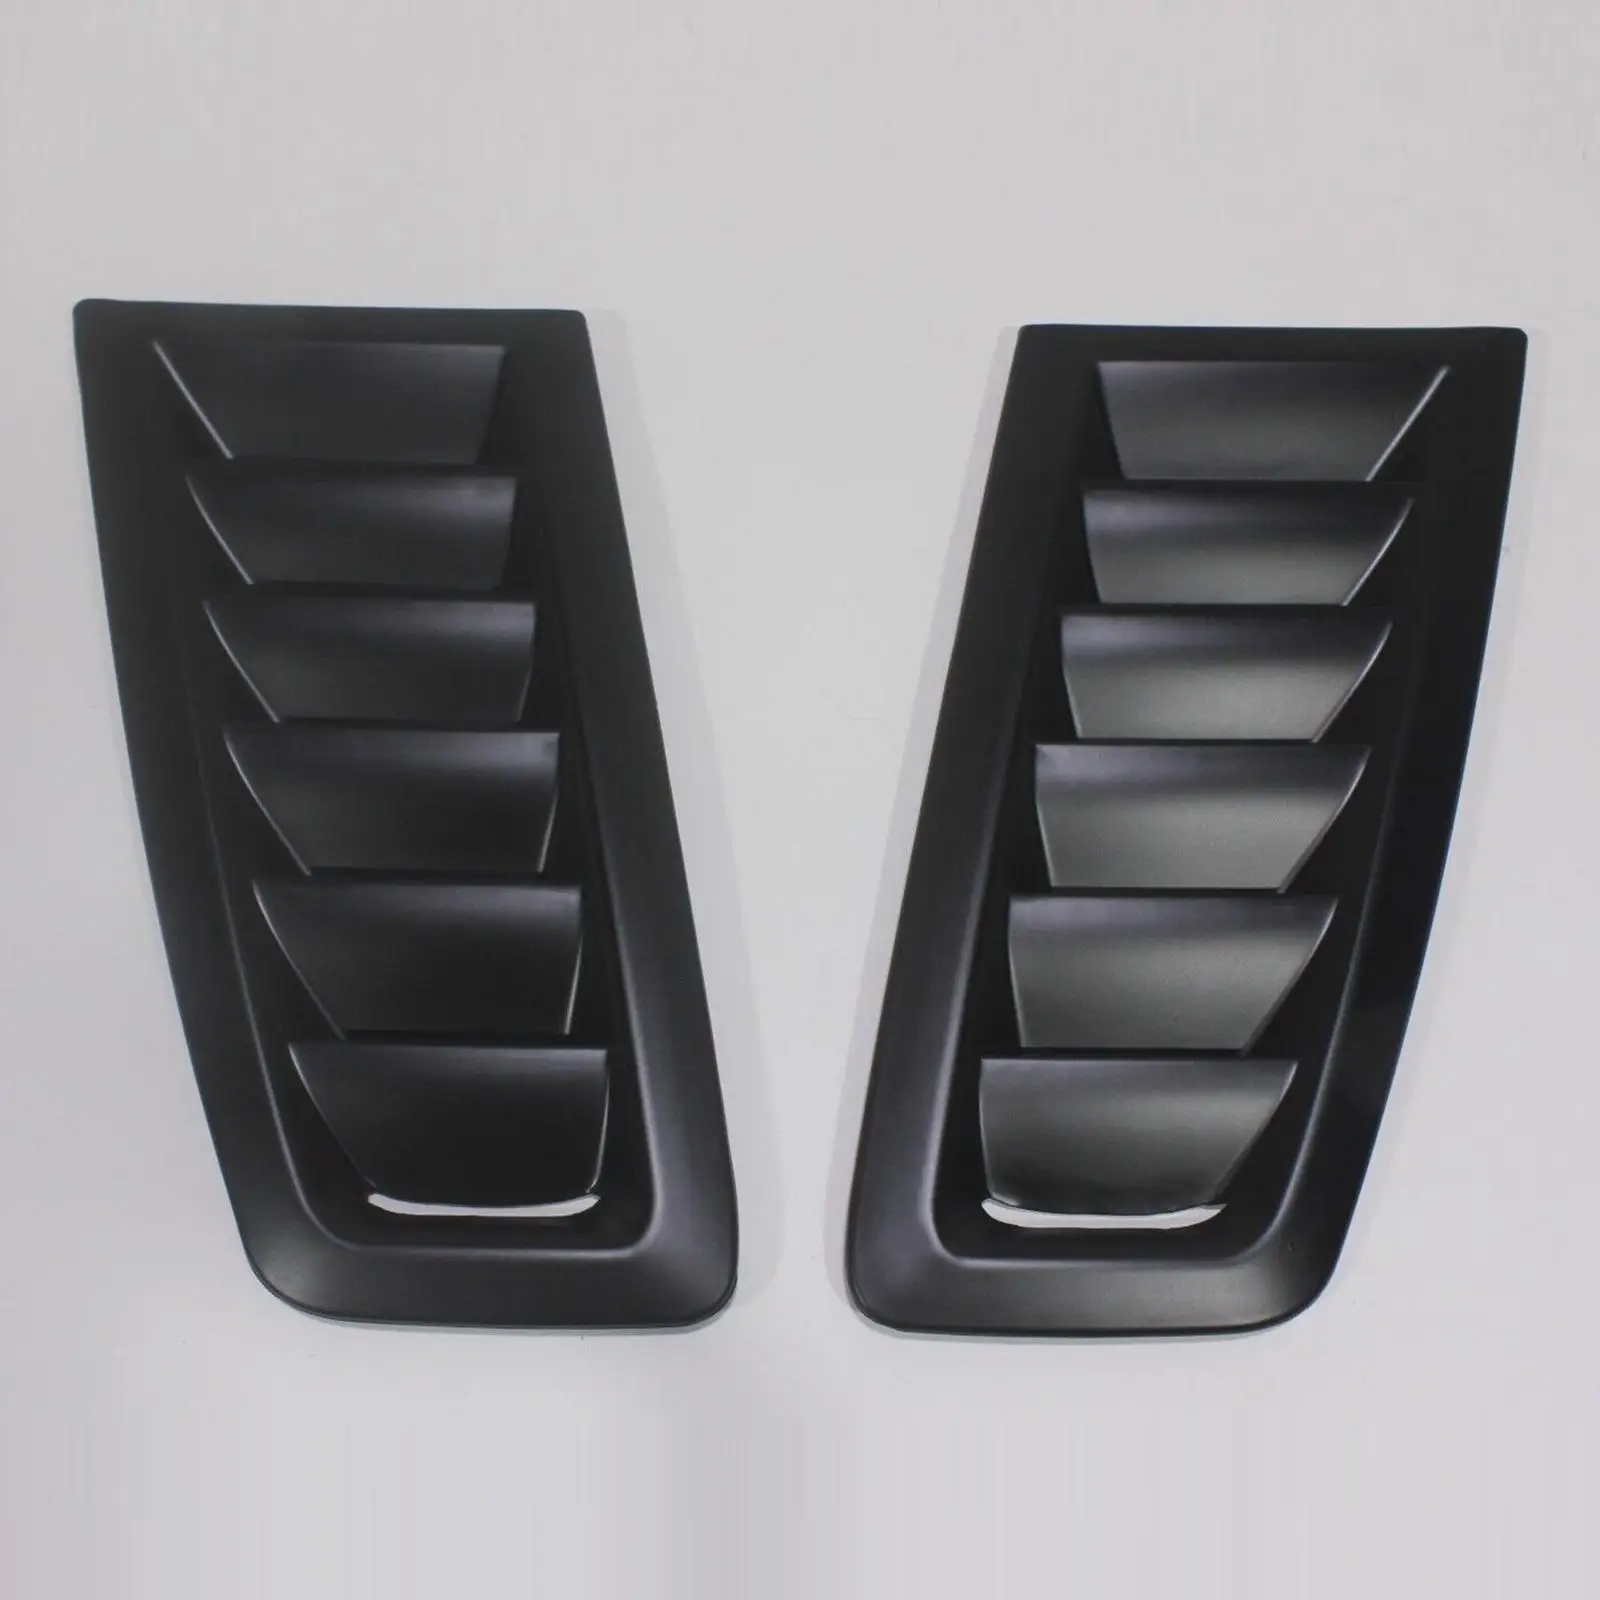 2x Car Hood Vent Scoop Kit Bonnet Air Vents Hood Trim for Ford Focus RS Style Car Modified Accessory Matte Black Finish